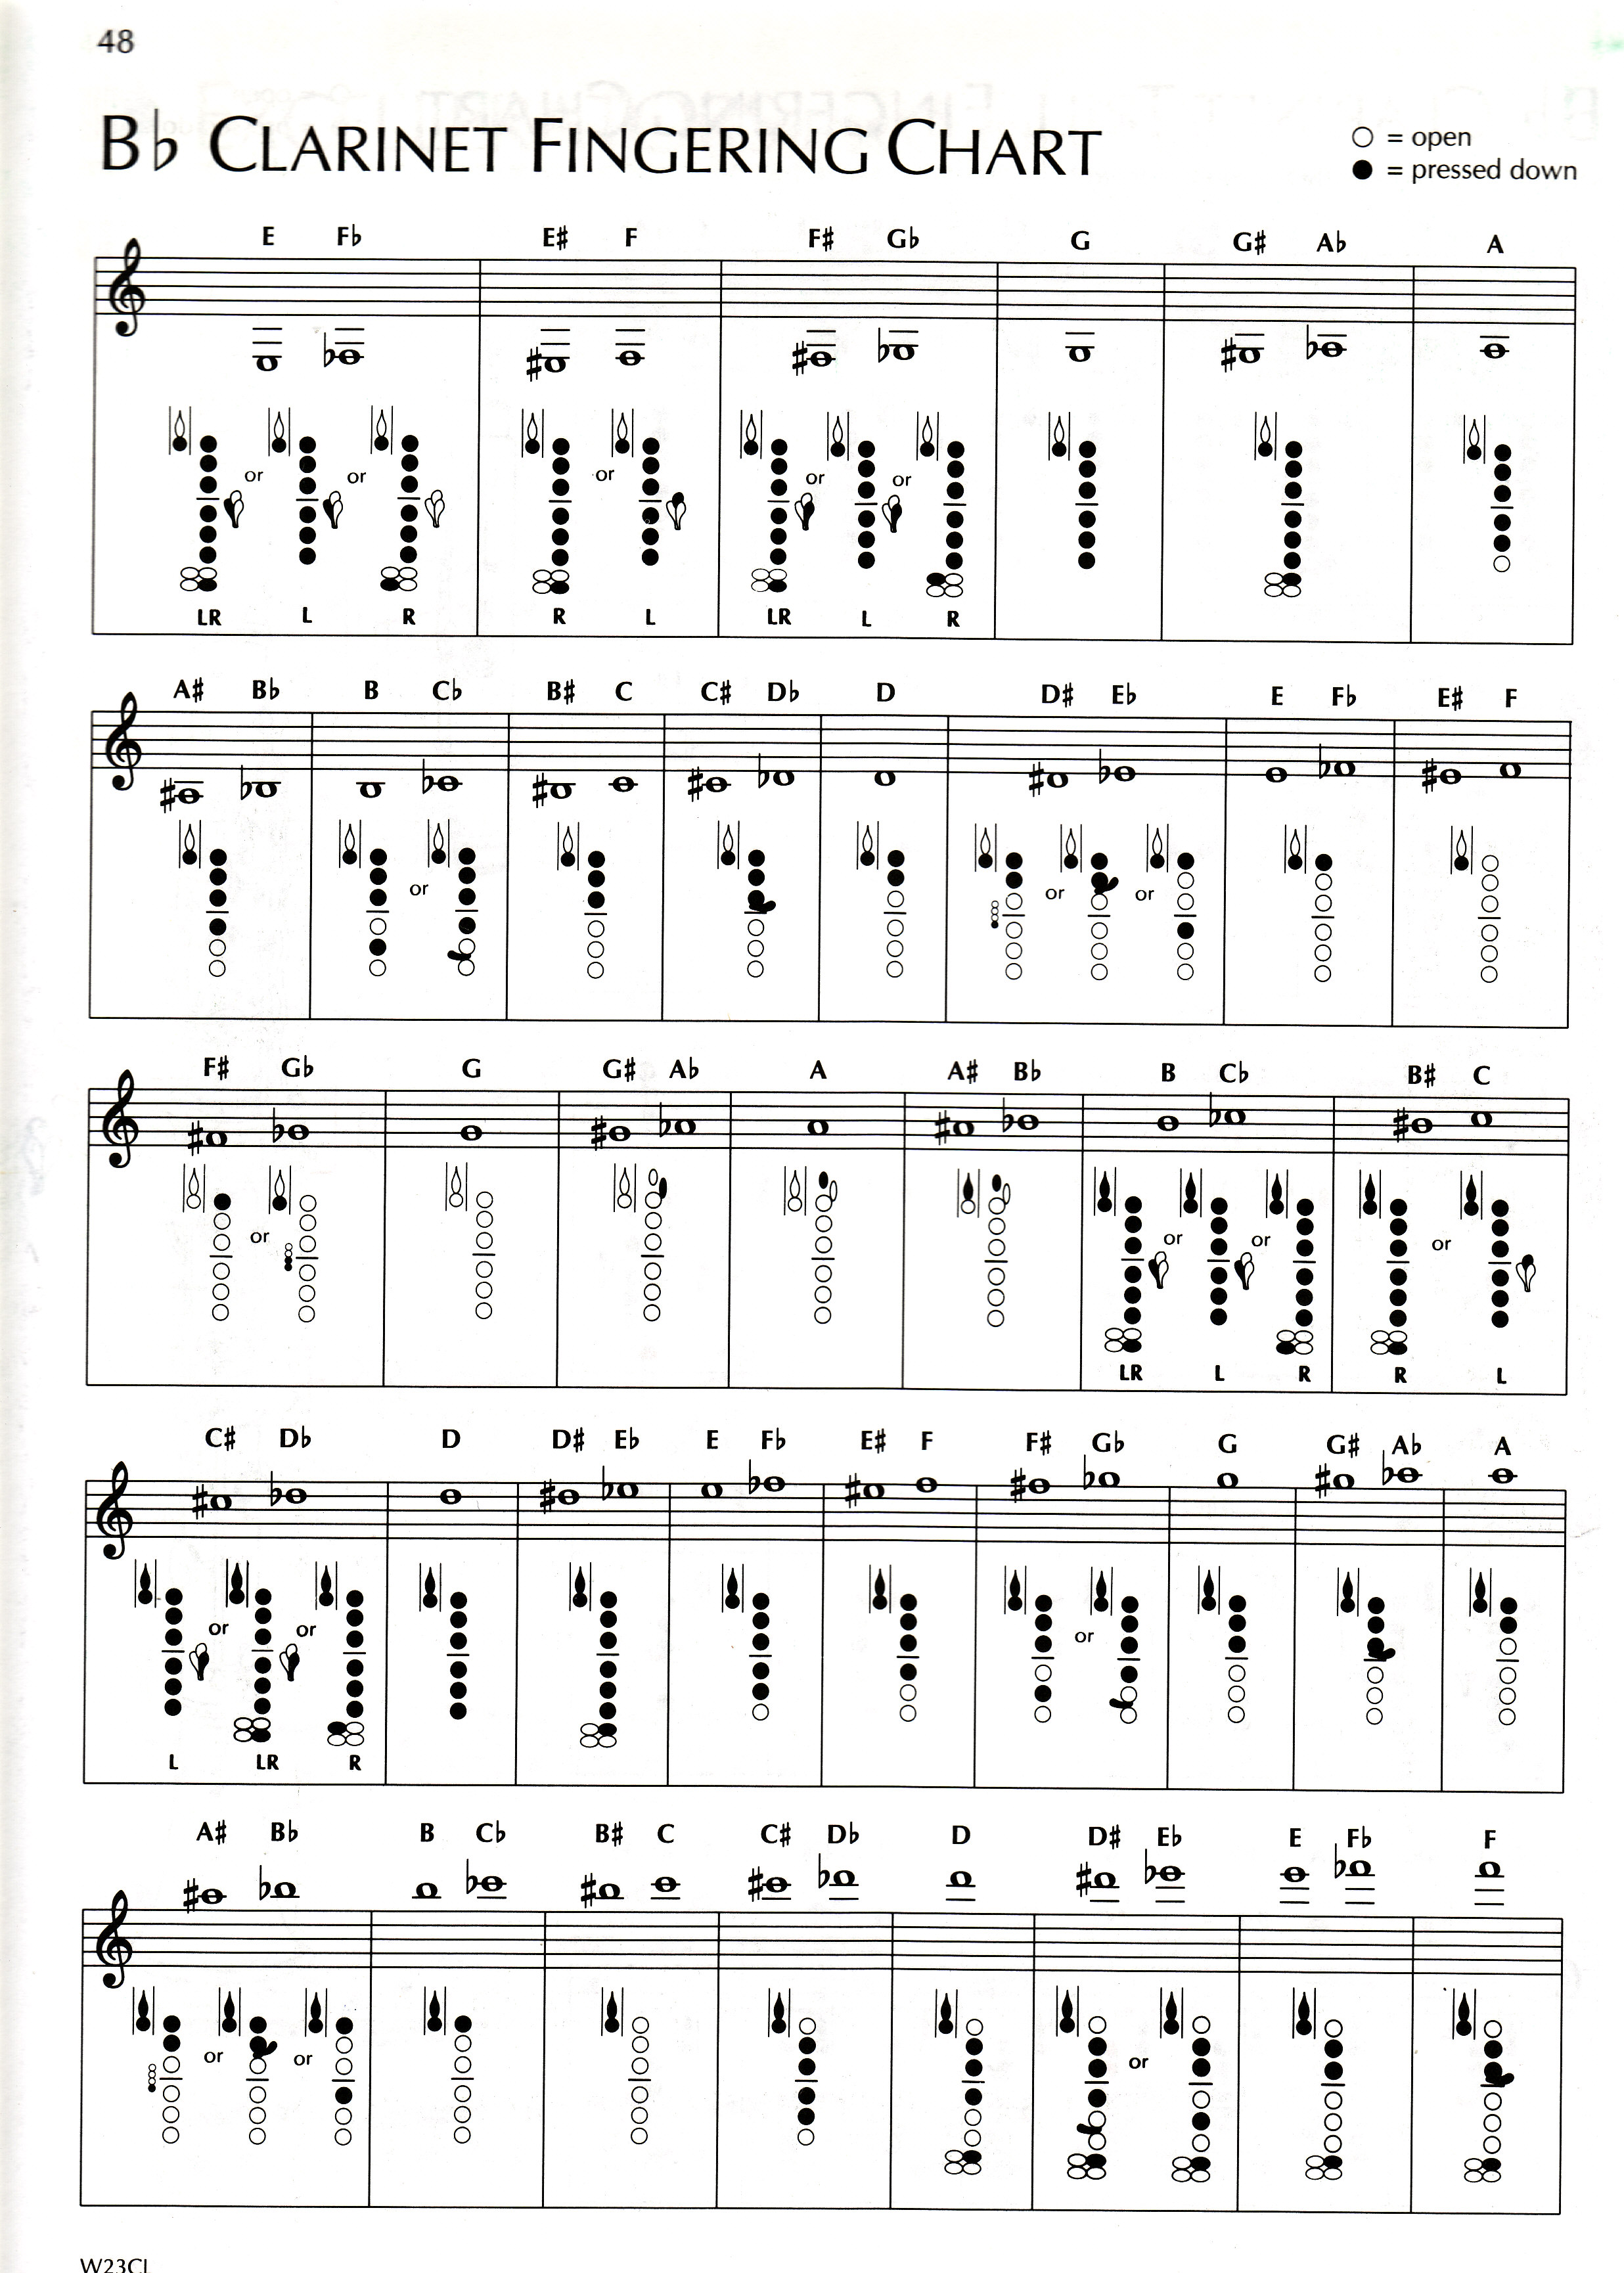 Bass Clarinet Chart